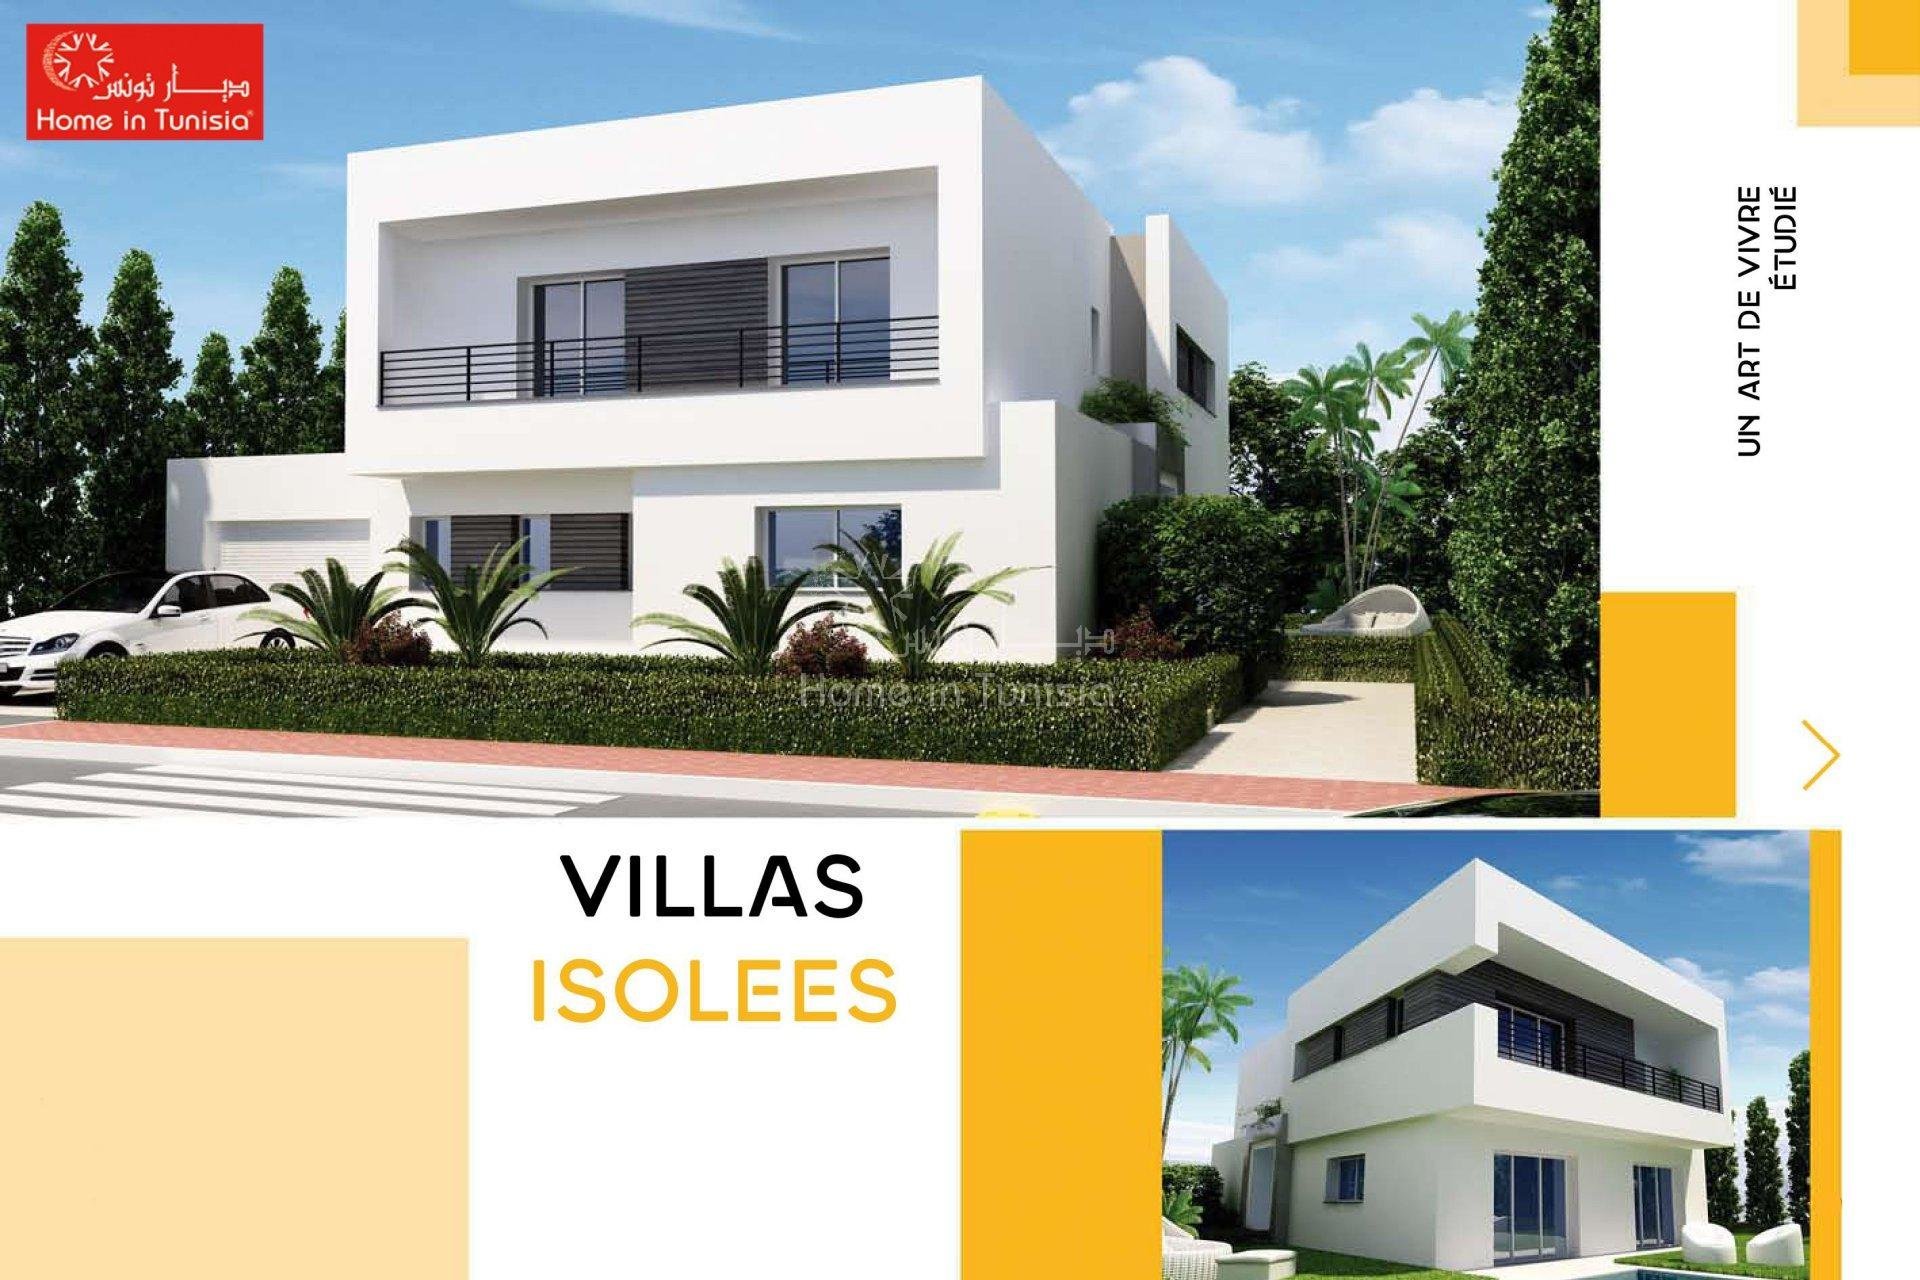 Villa golf isolée neuve de 345 m2 avec 4 chambres terrasse jardin piscine garage